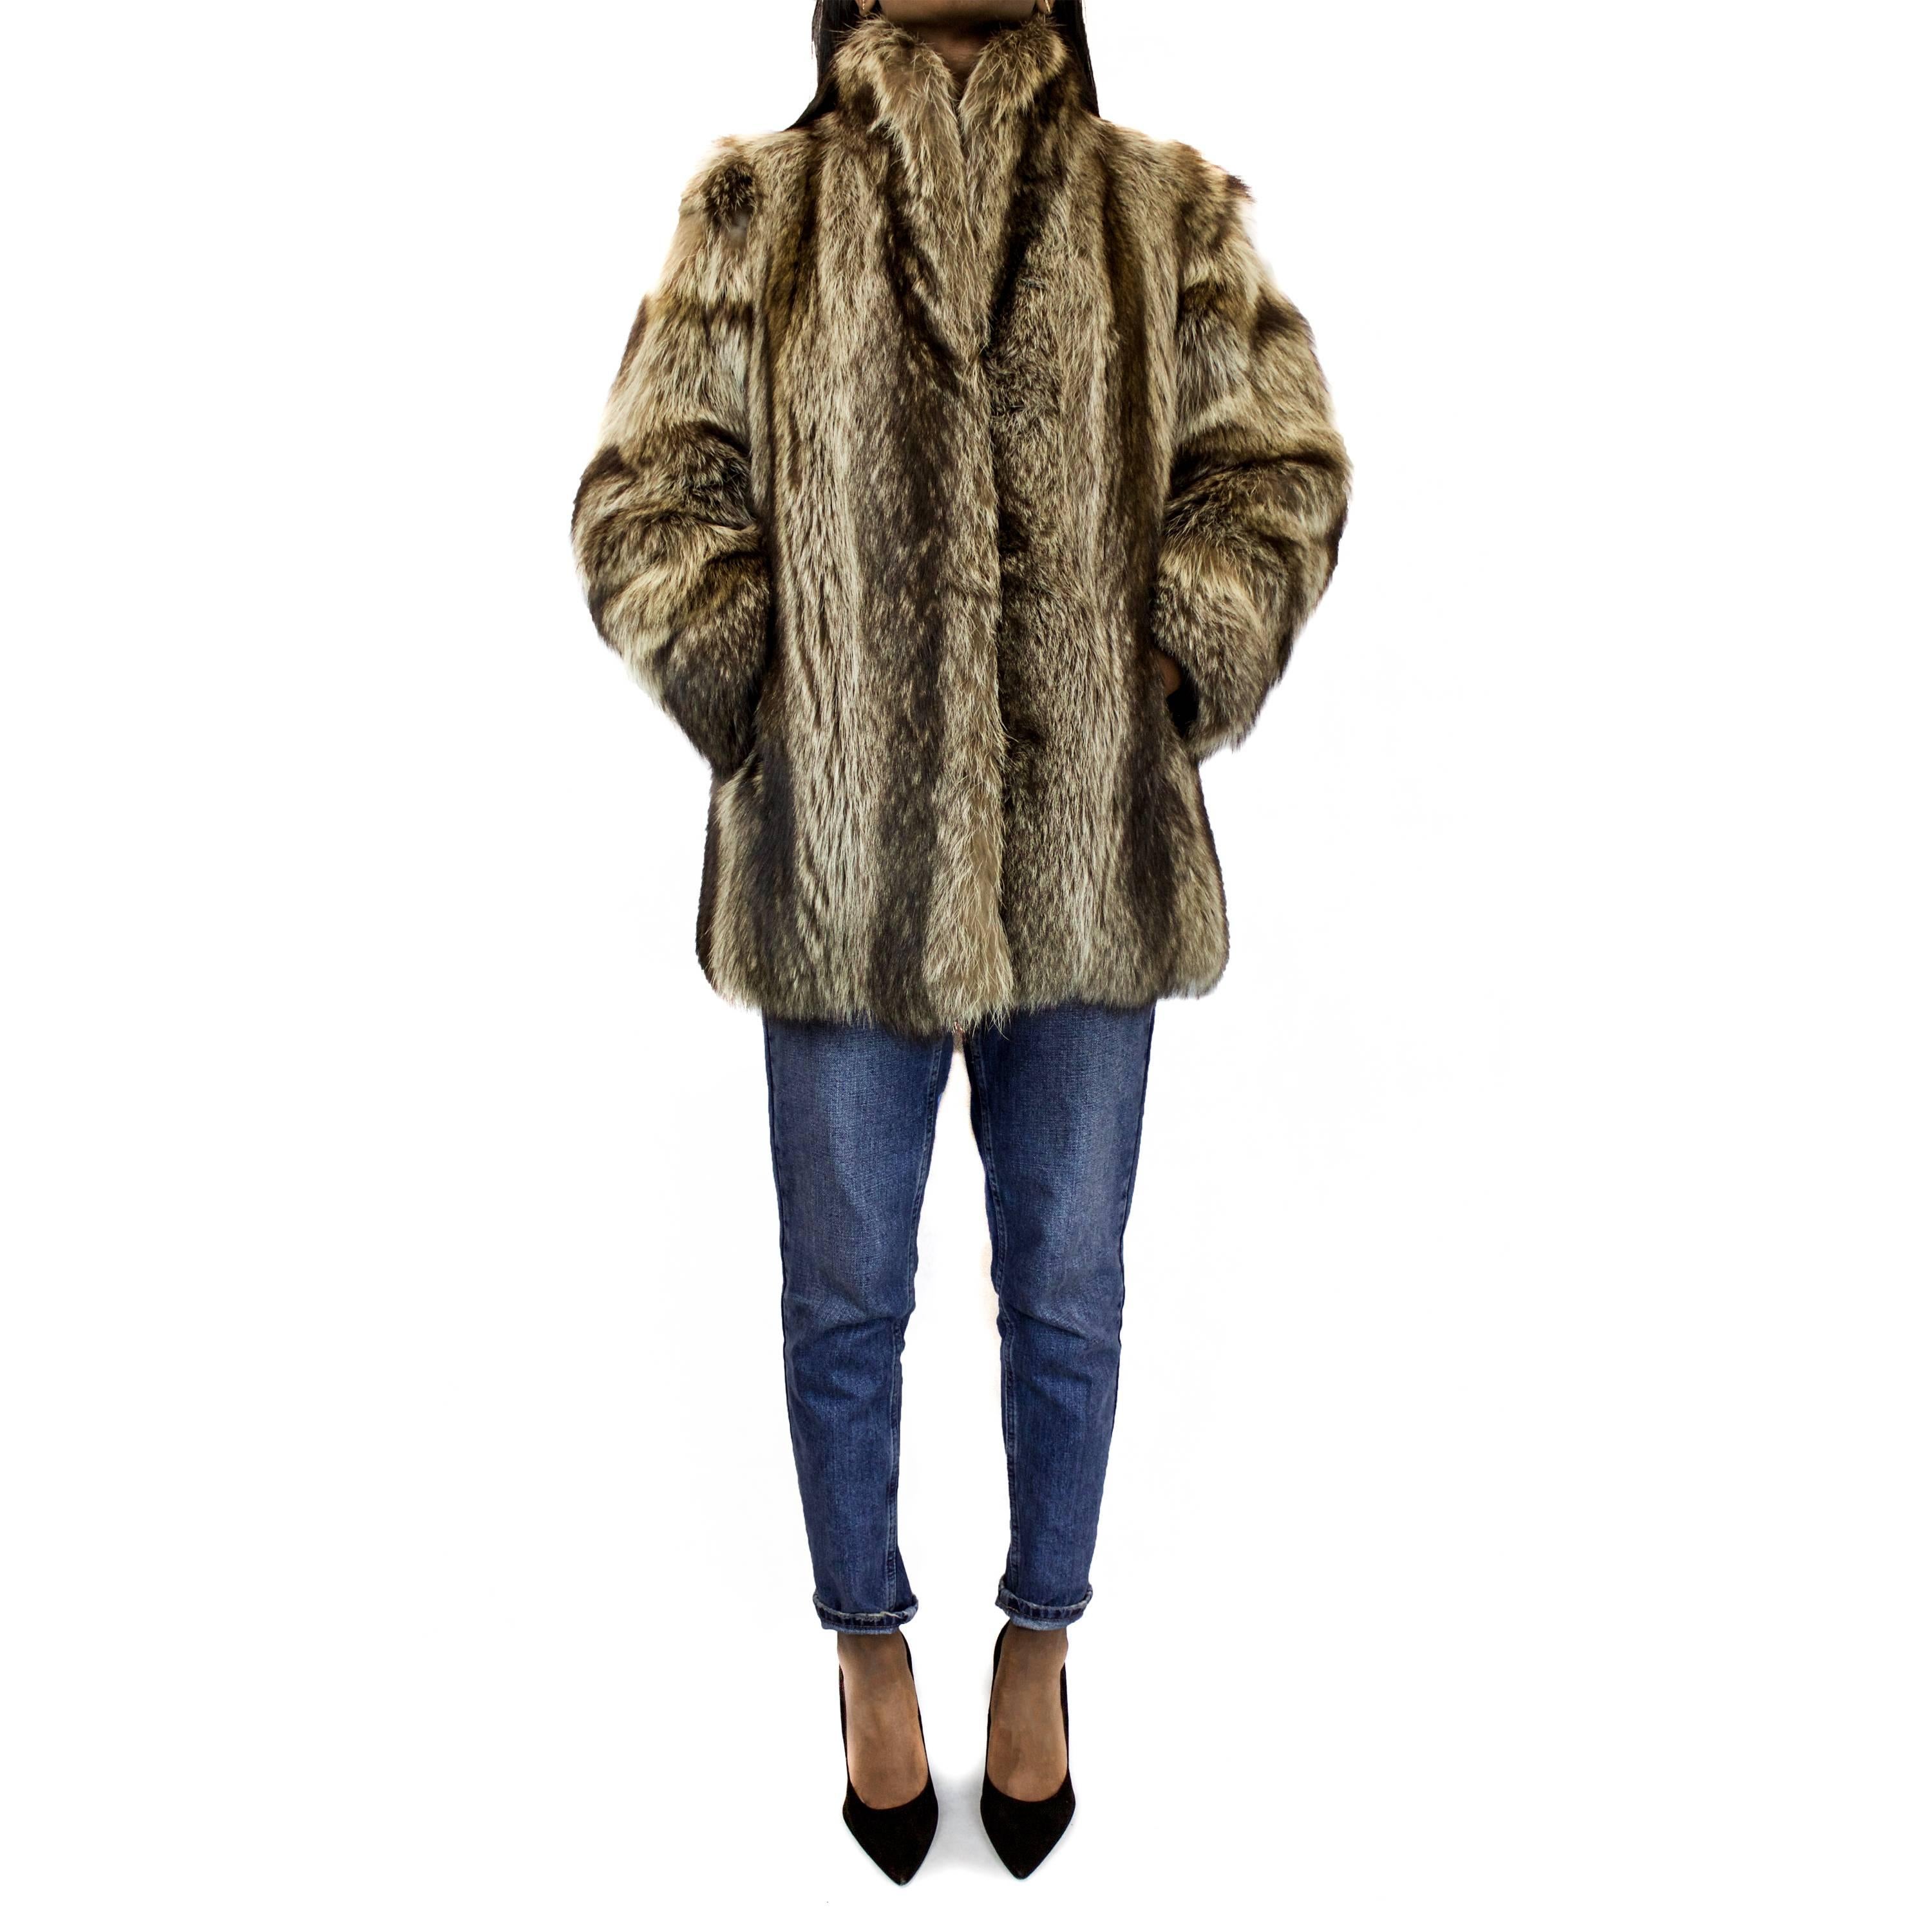 Women's Yves Saint Laurent 1940s-inspired fur jacket. circa 1970 